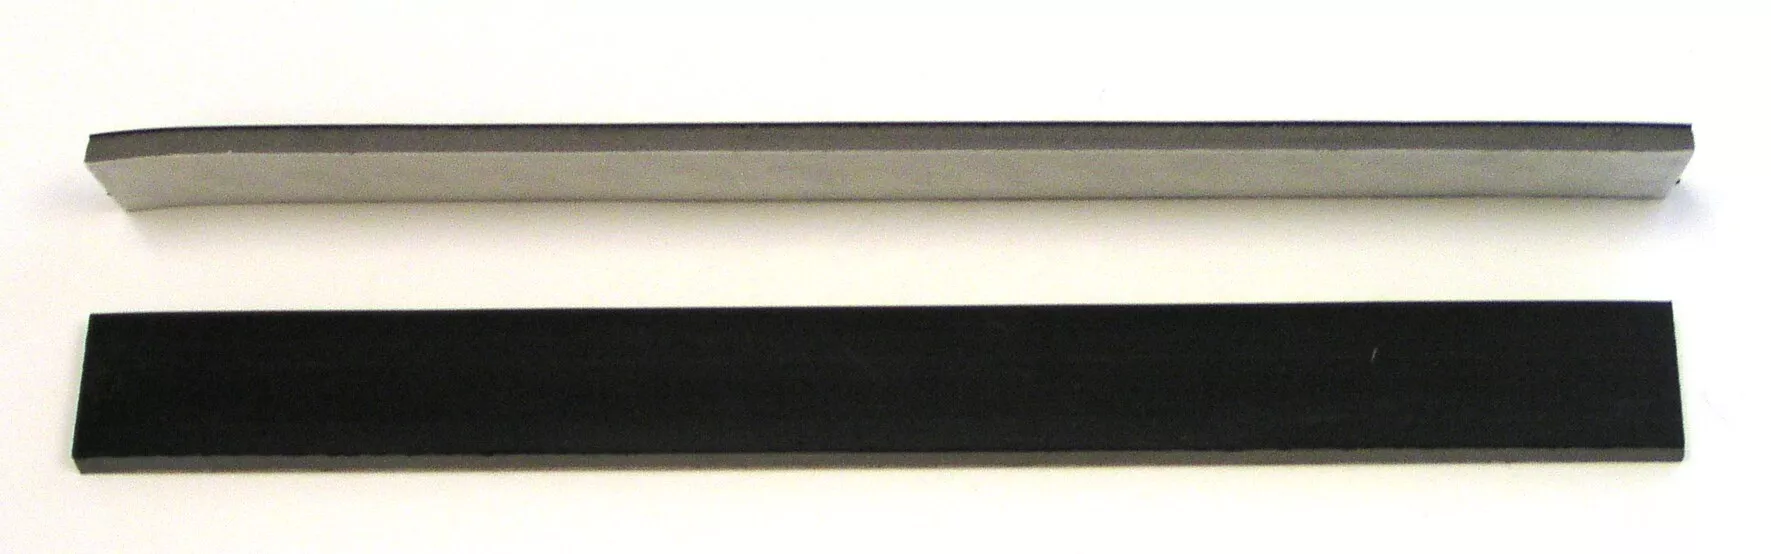 3M™ File Belt Sander Platen Pad Material 28378, 3/4 in x 7 in x 1/8 in,
Soft, 10 ea/Case